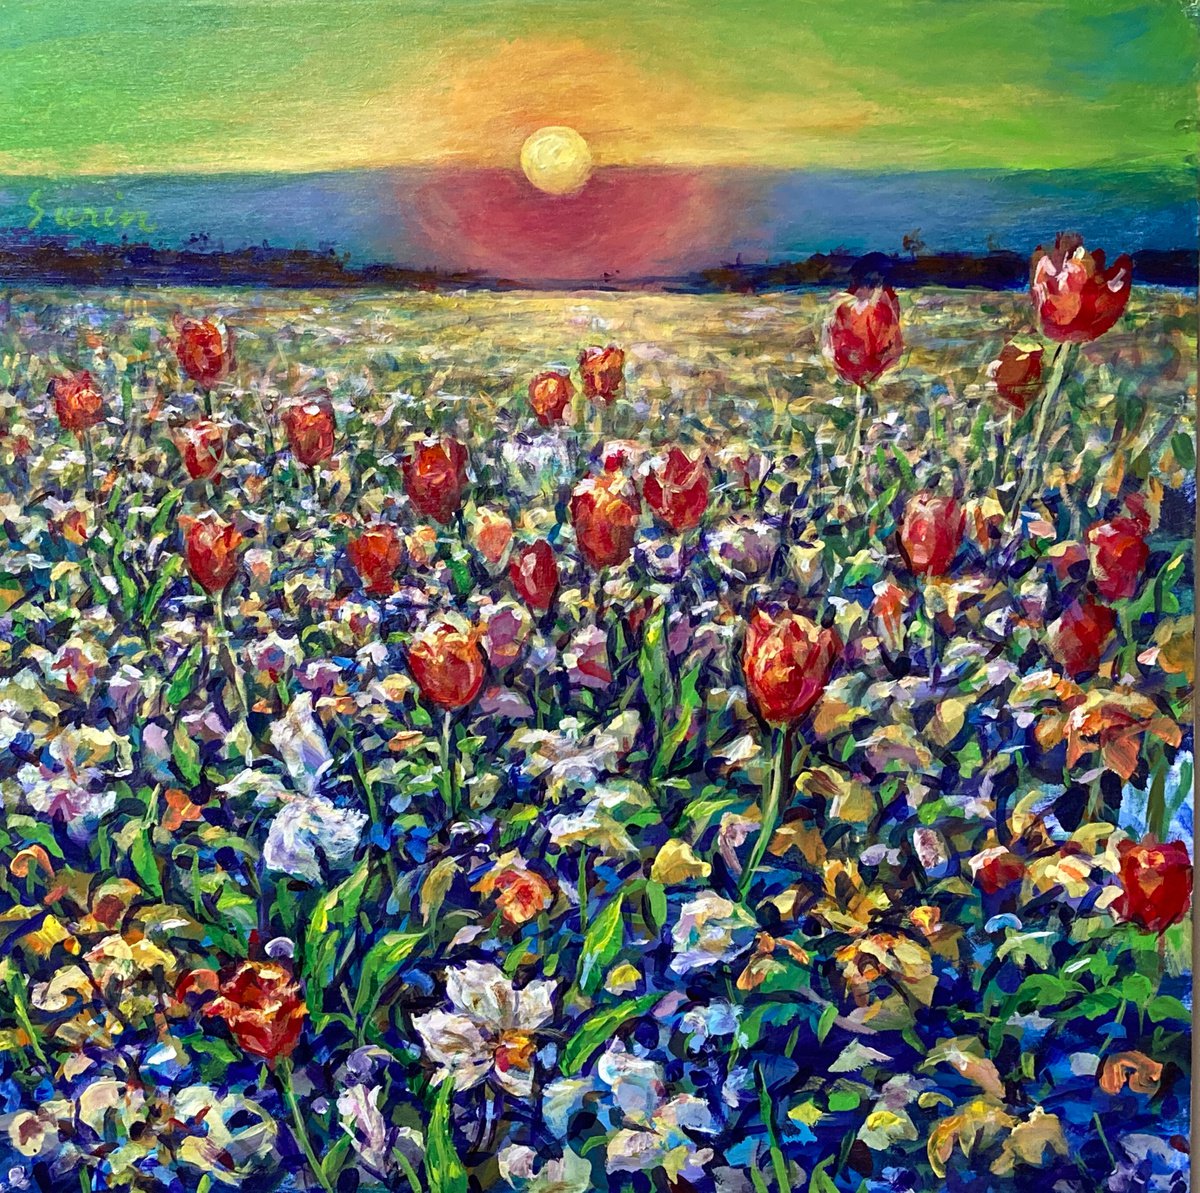 Sunlight Serenade, Tulip Fields, wild flowers, flower garden, sunset by Surin Jung